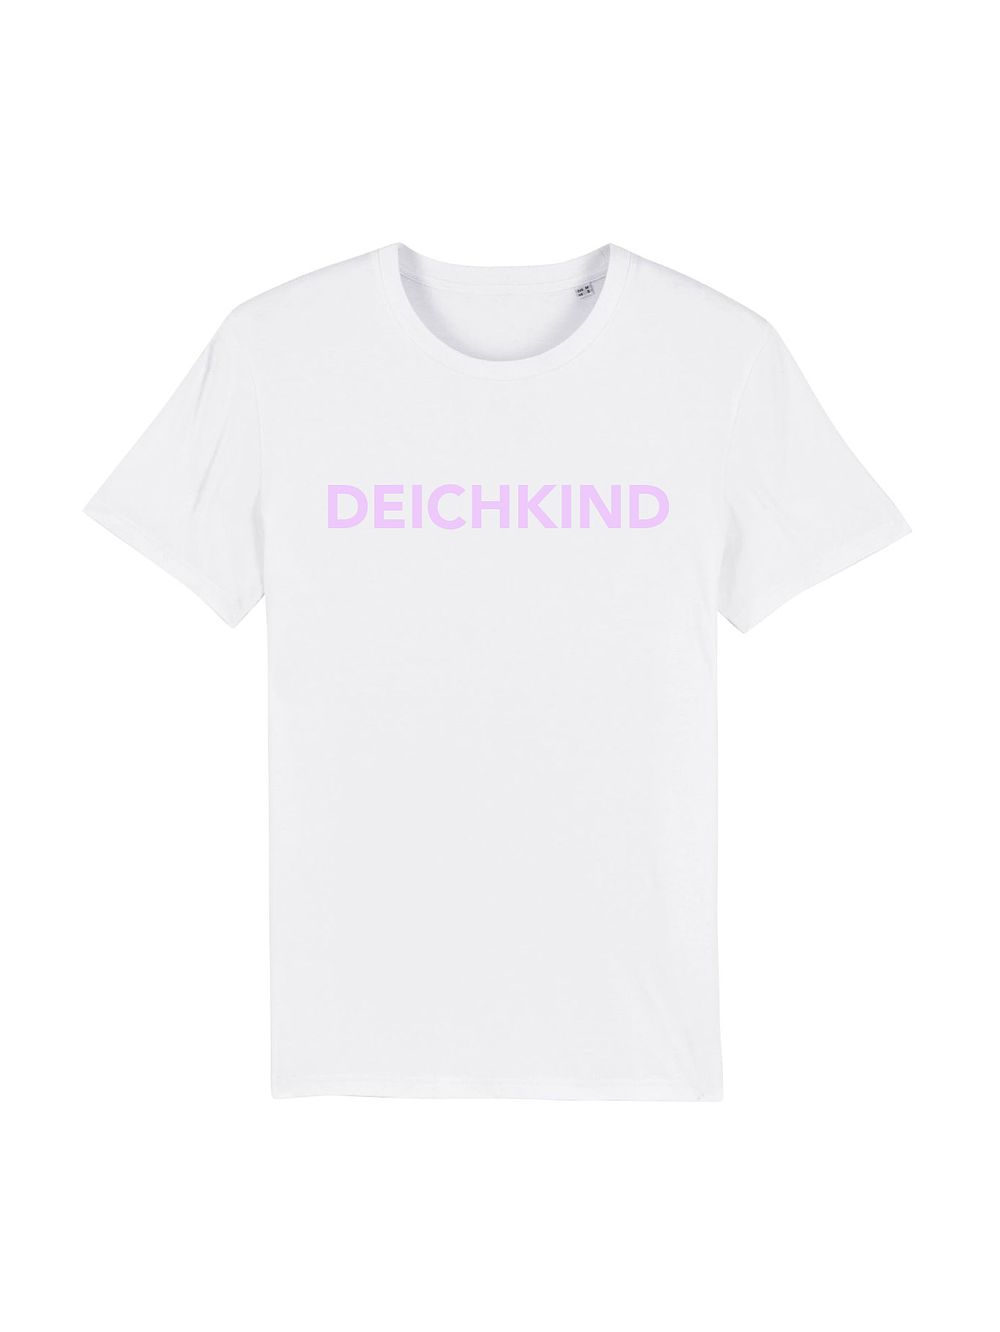 - DEICHKIND - Schriftzug T-Shirt - Weiß/Rosa